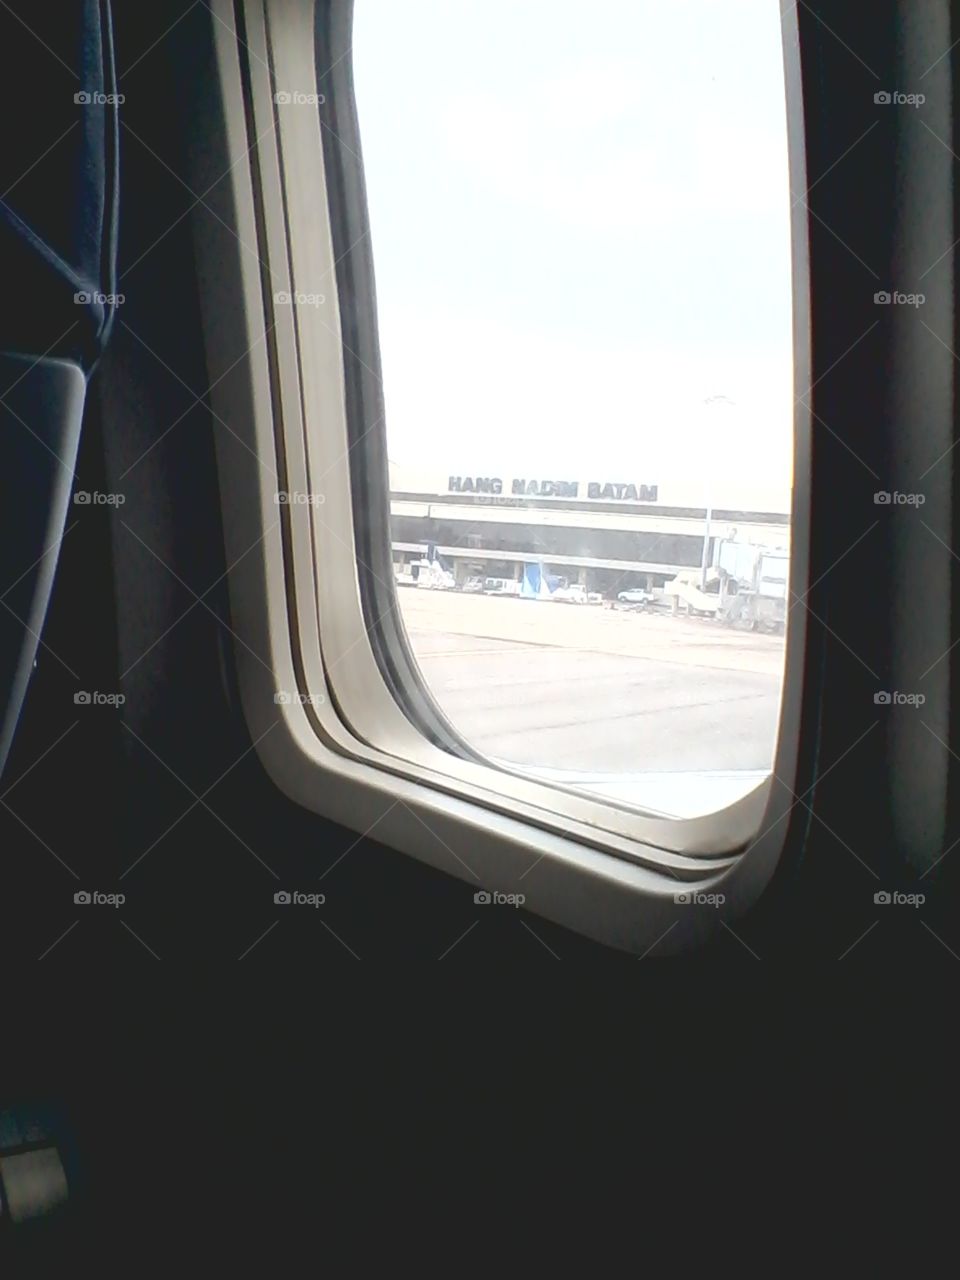 jendela pesawat